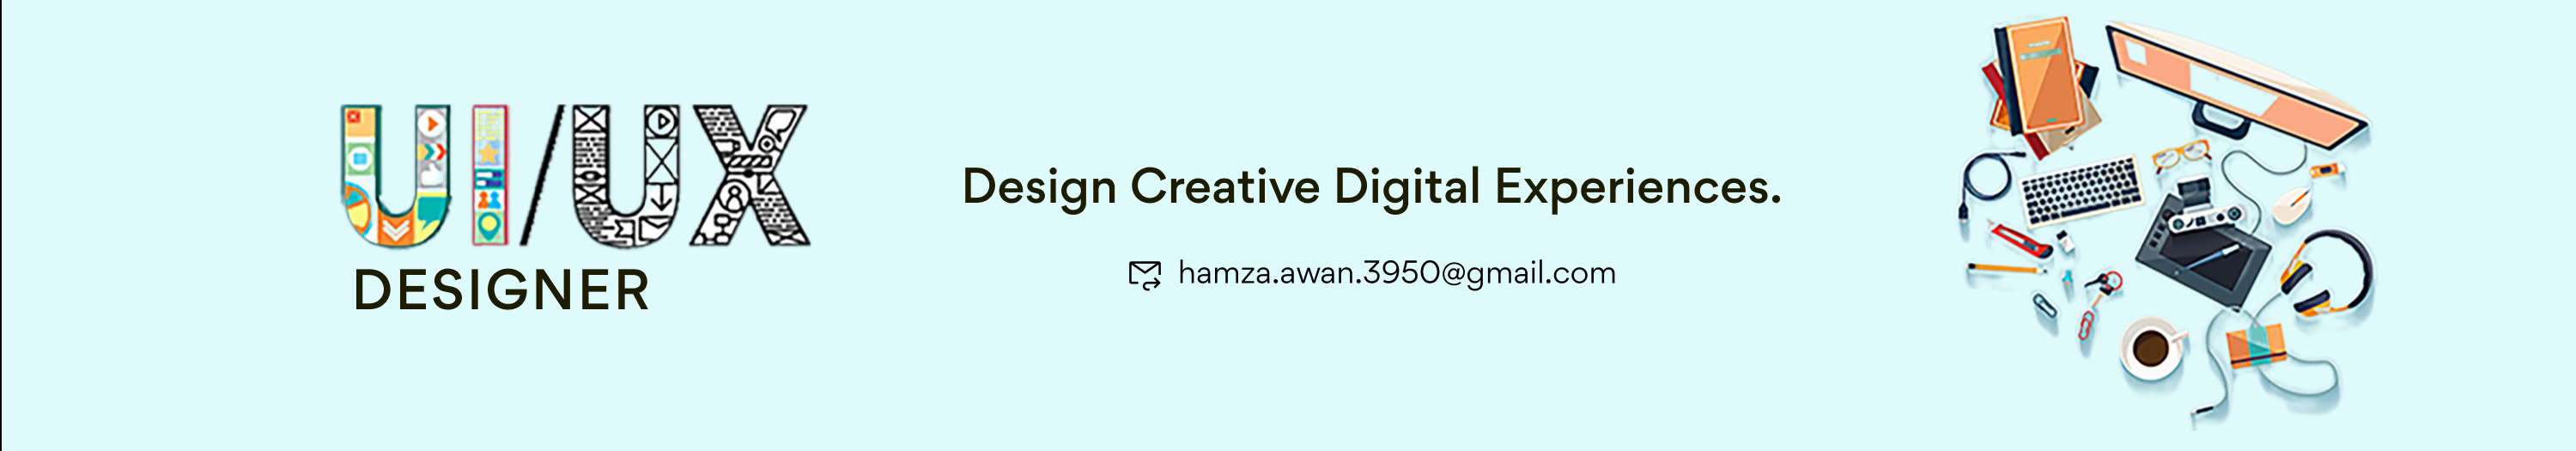 Banner de perfil de Hamxa Awan